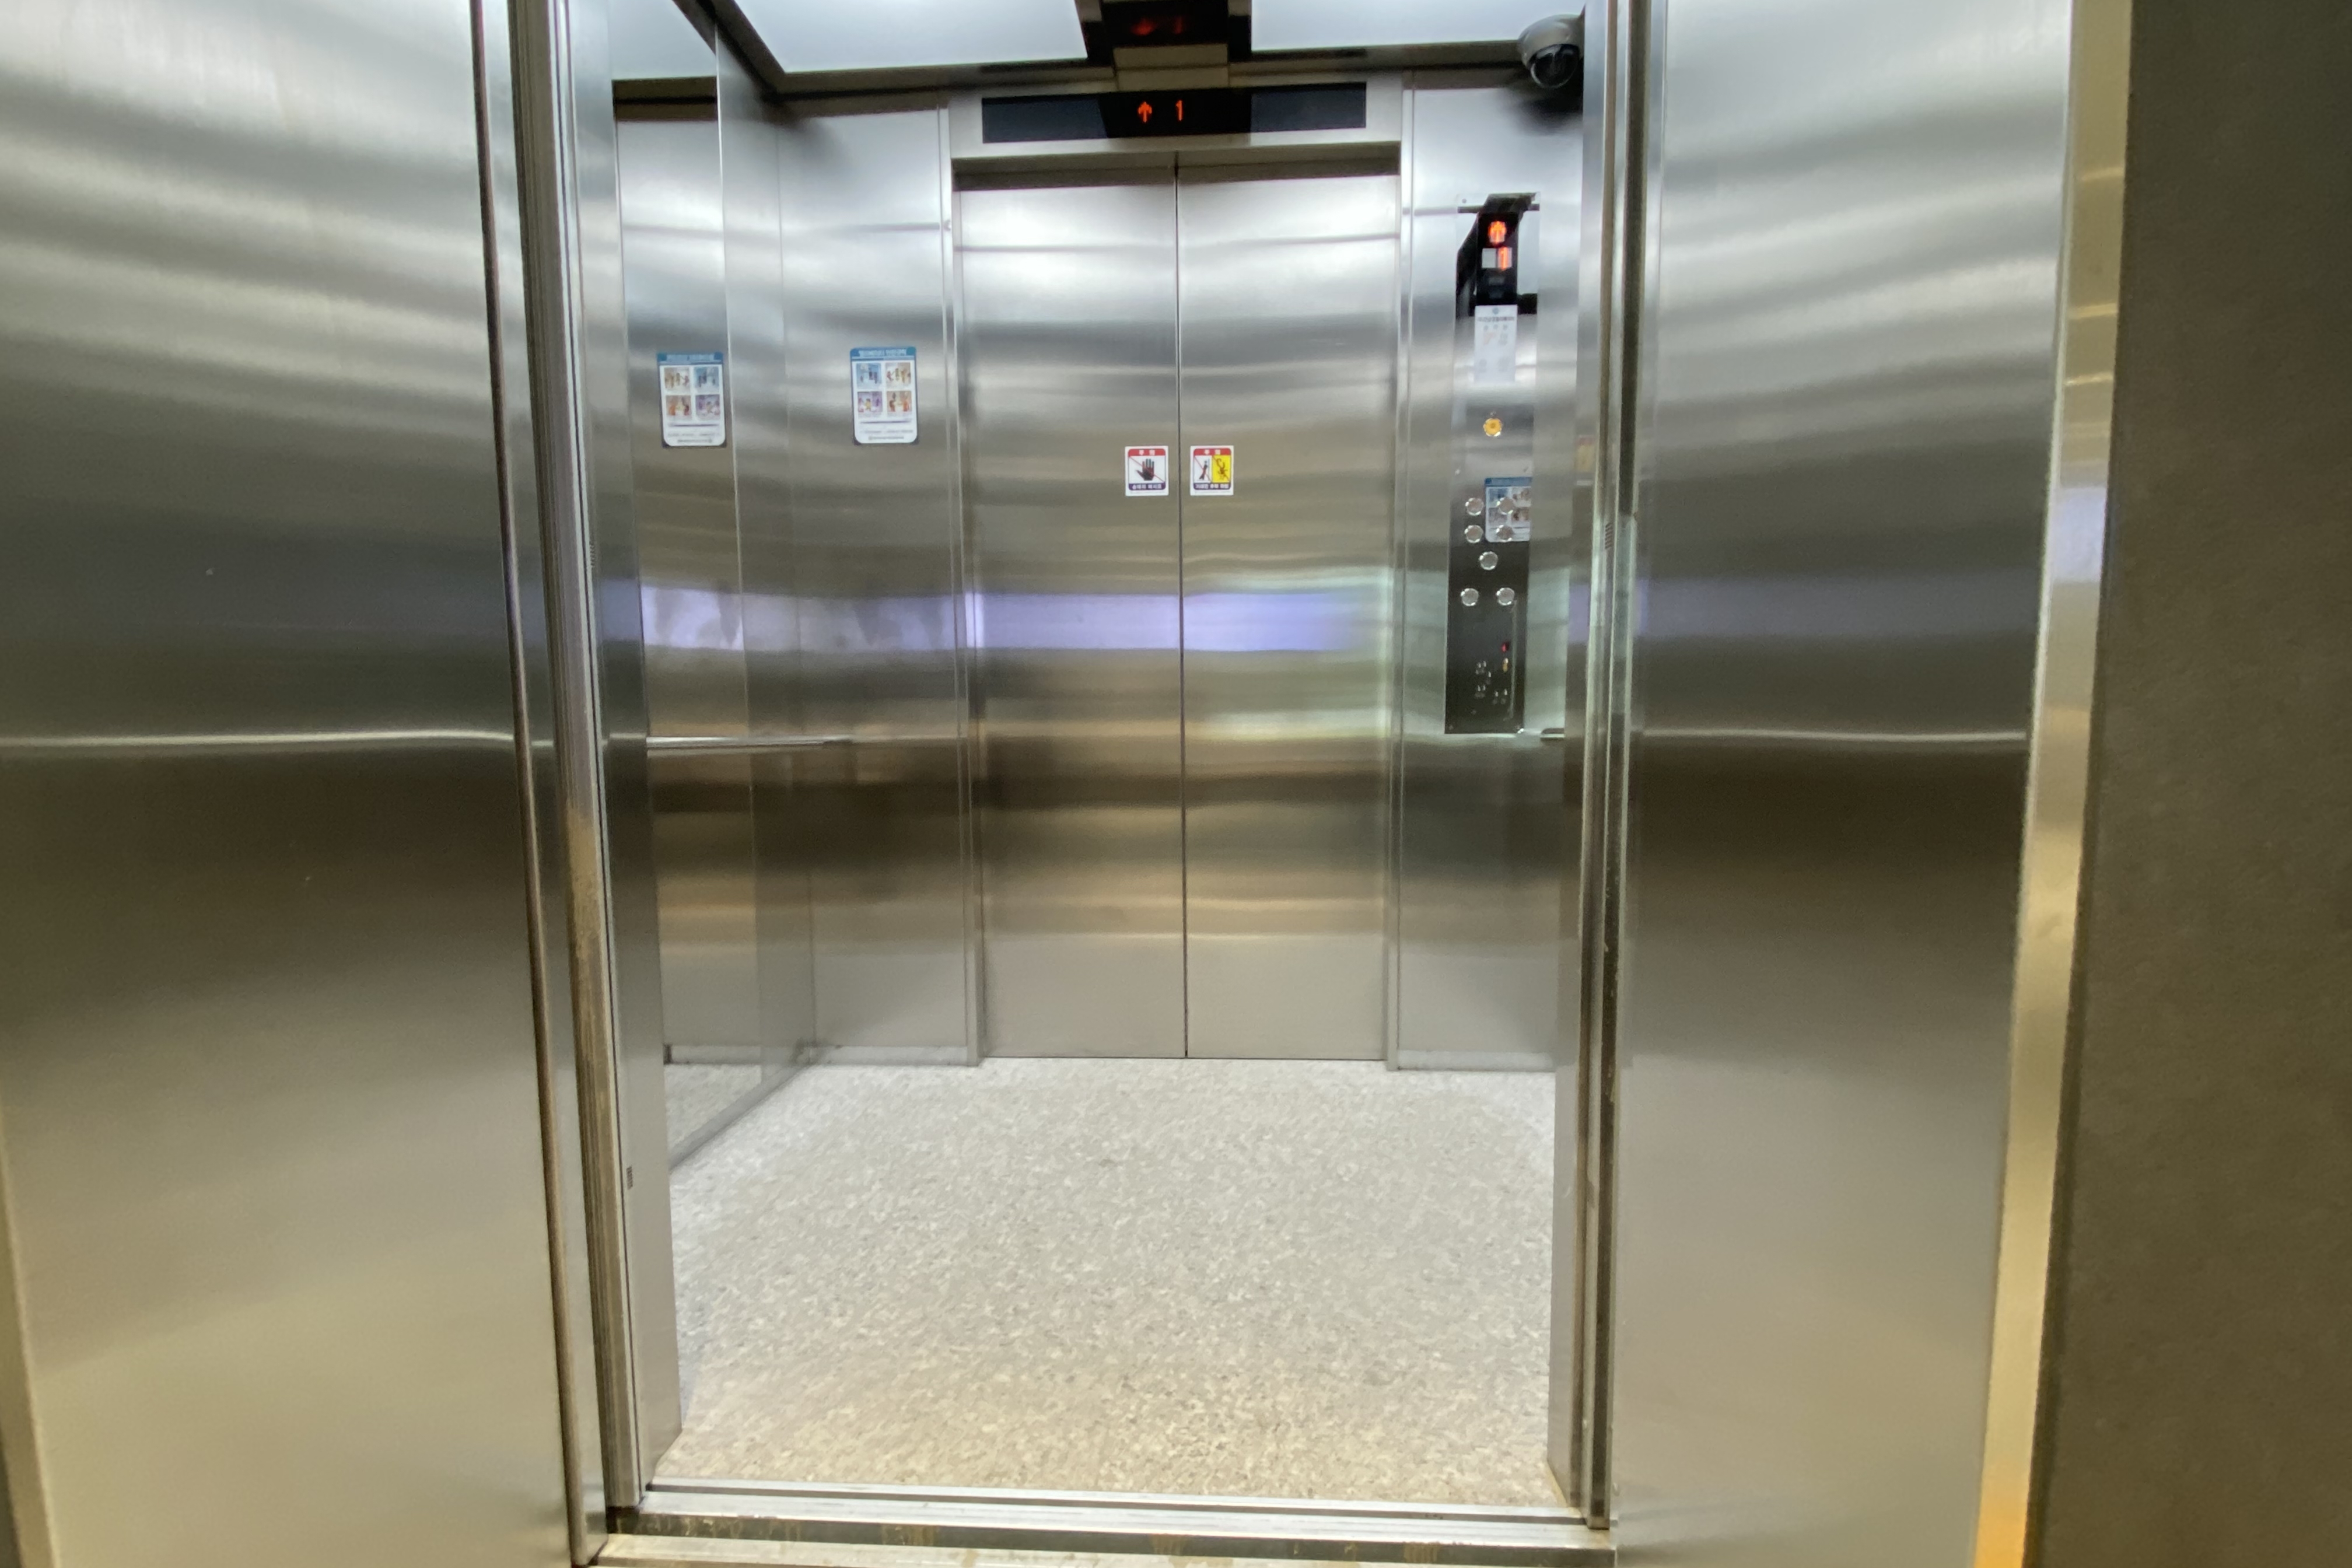 Elevator0 : Spacious interior space of the elevator
